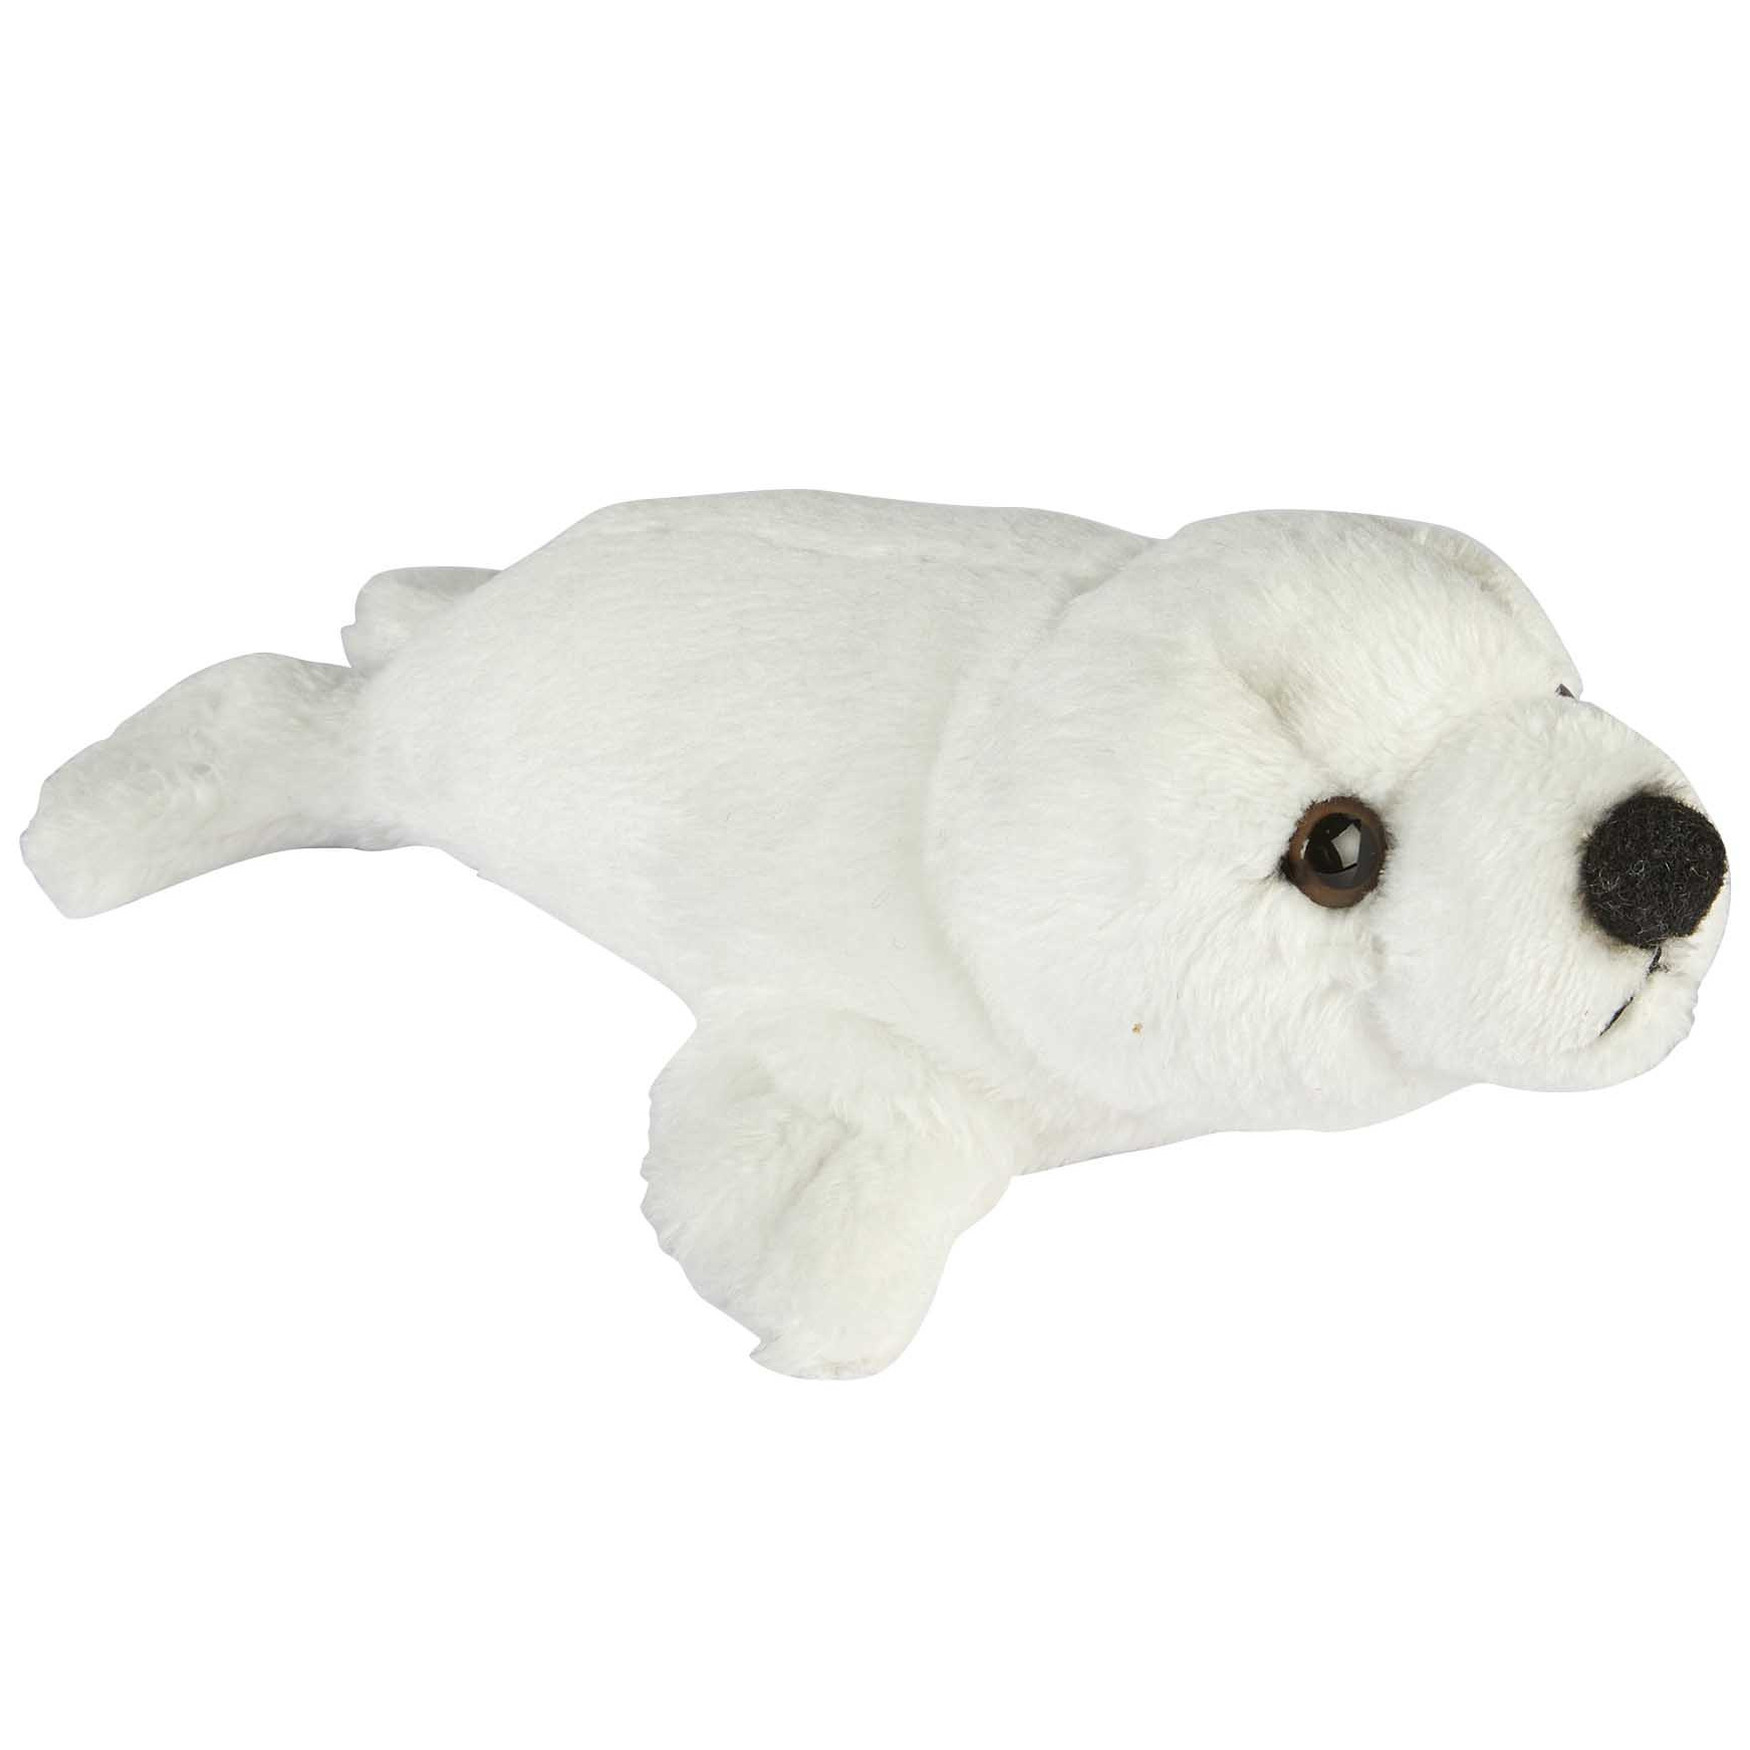 Pluche knuffel dieren Witte zeehond pup van 15 cm